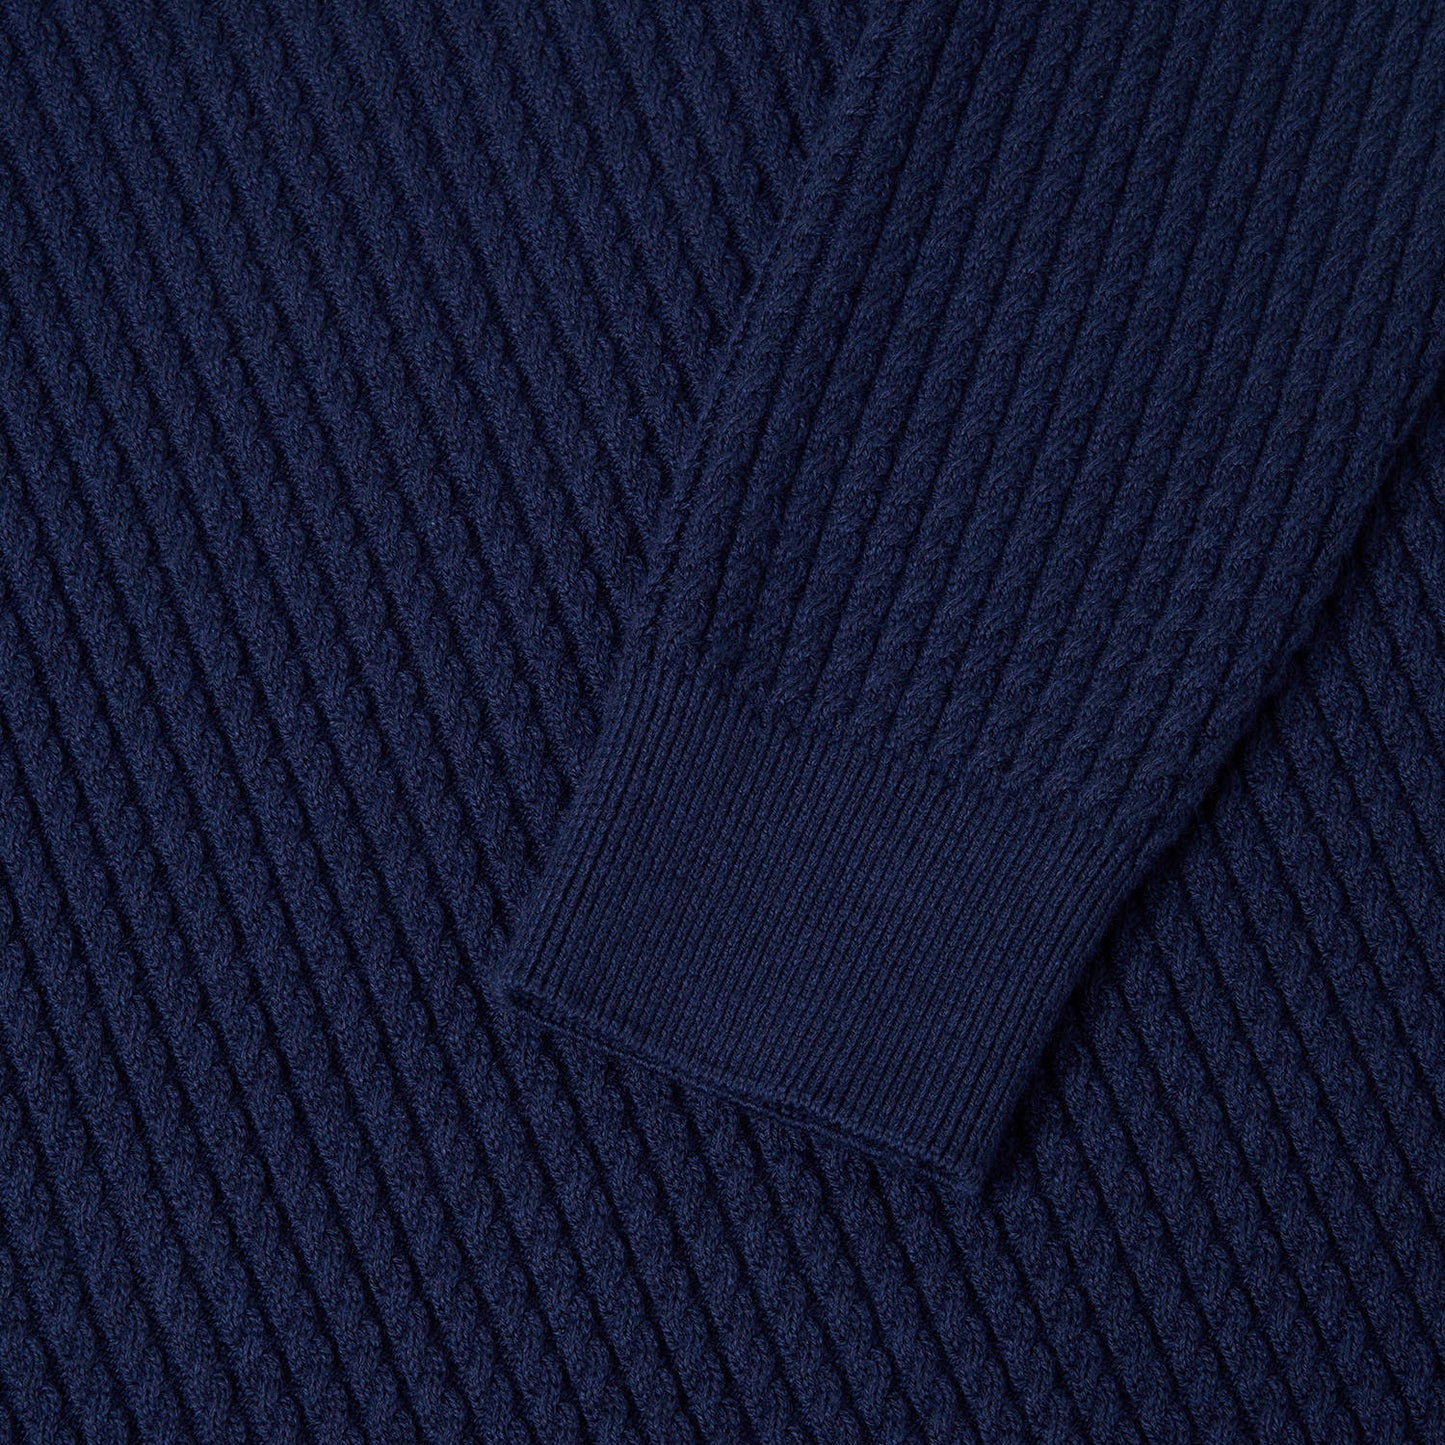 Remus Uomo 58673 29 Dark Blue Long Sleeve Crew Neck Sweater